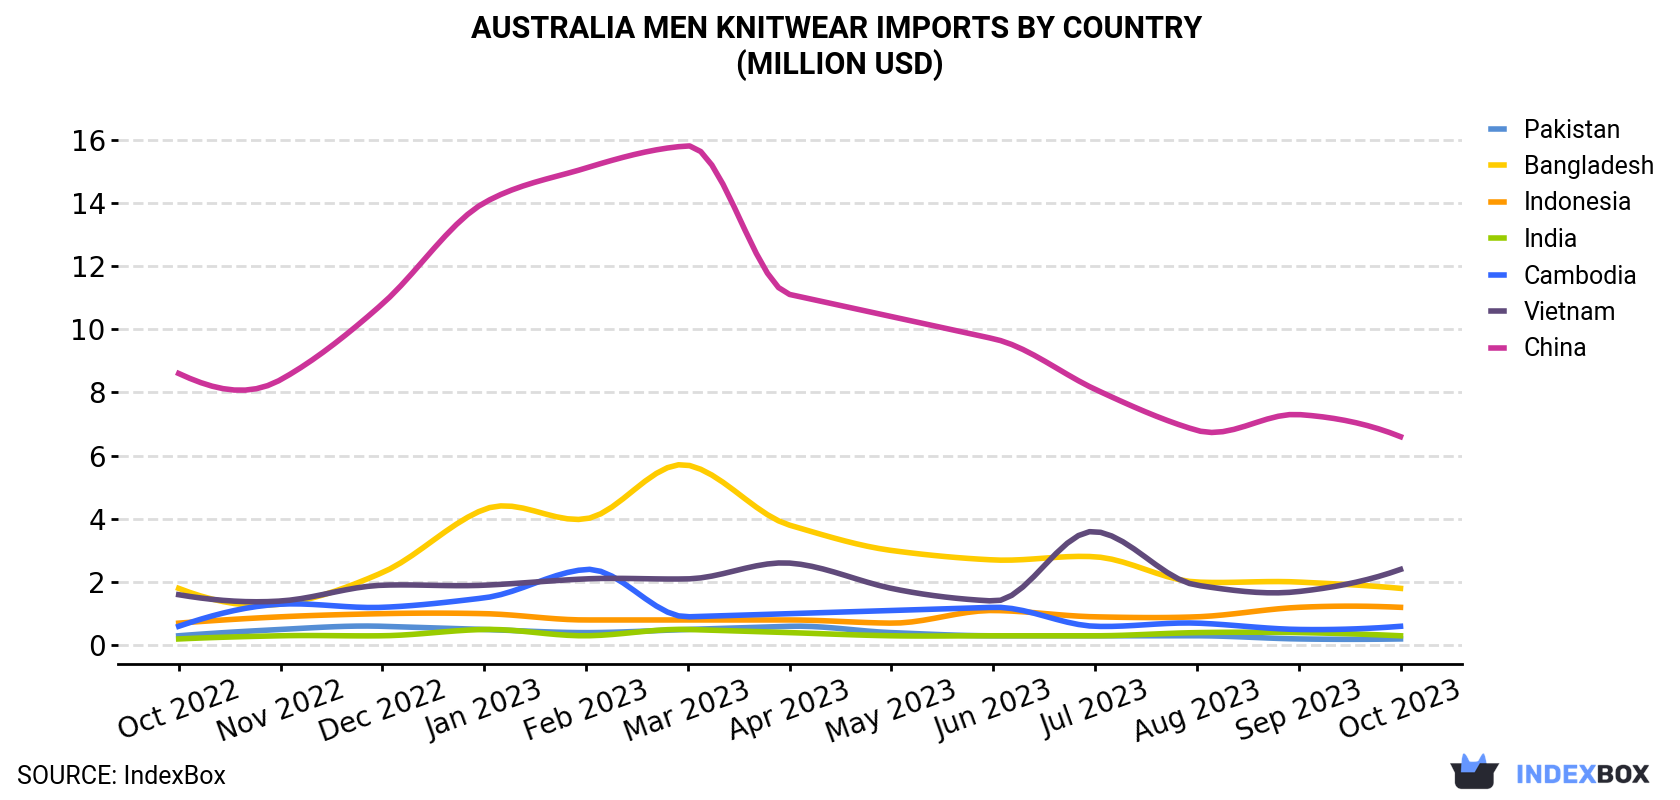 Australia Men Knitwear Imports By Country (Million USD)